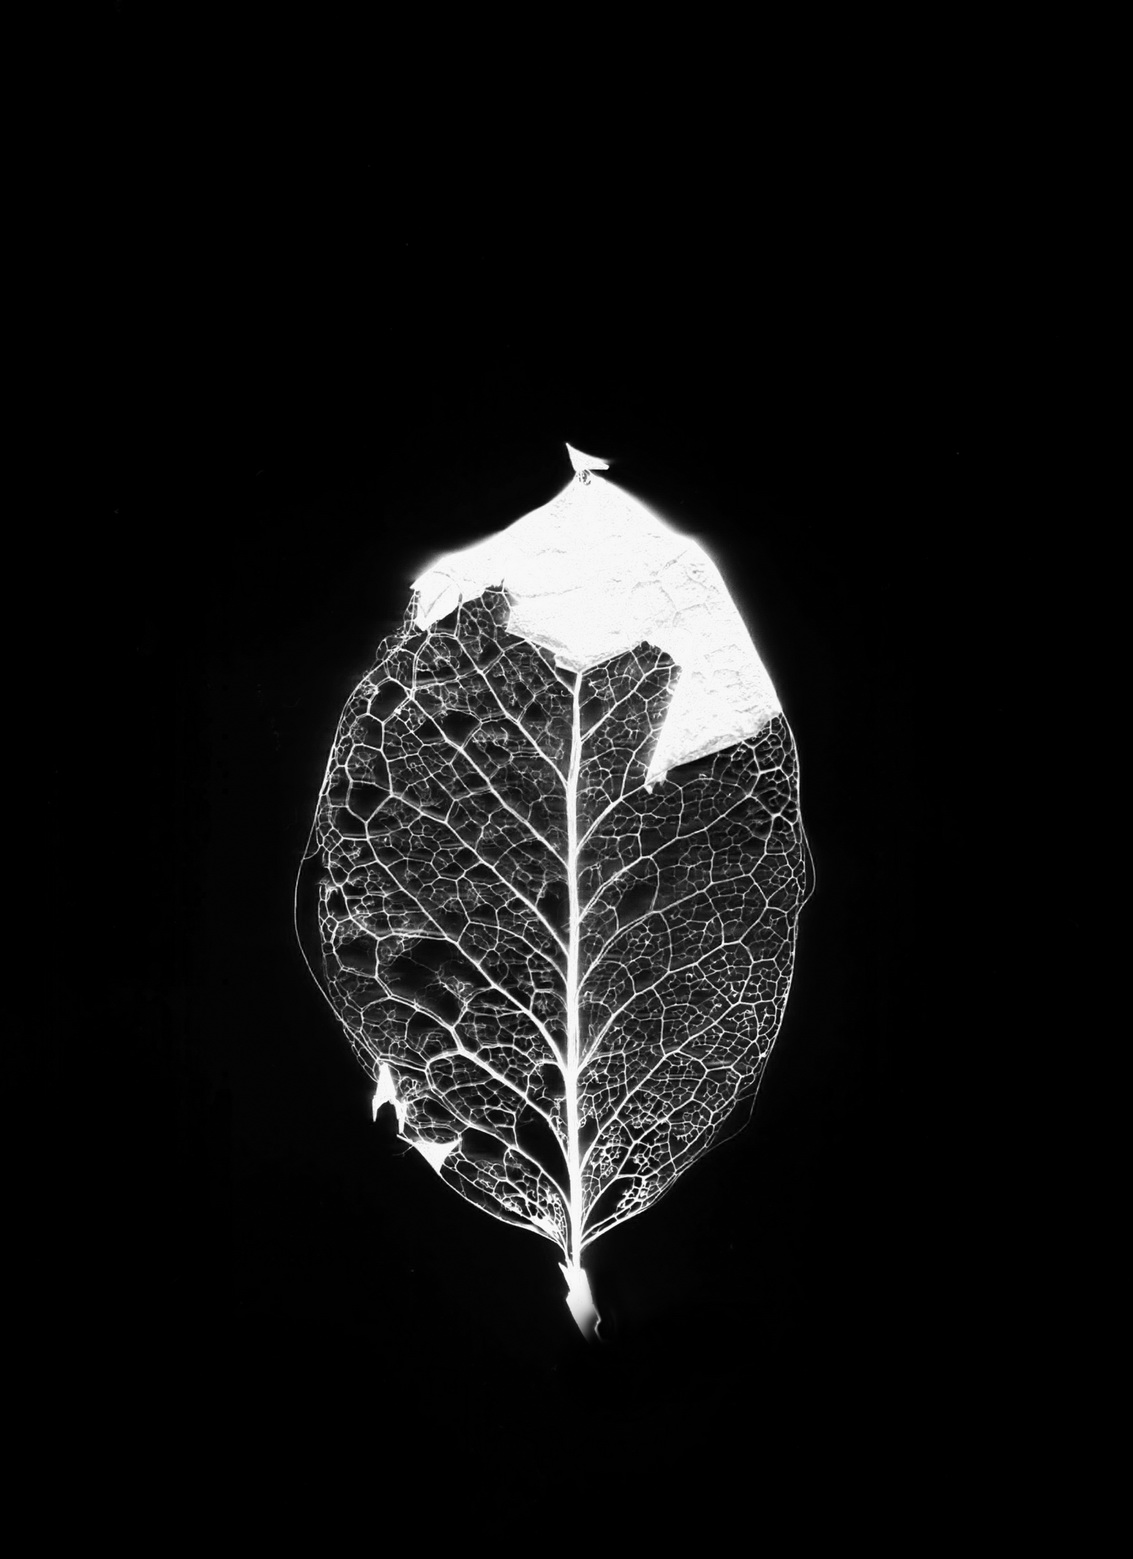 Leaf print by David J Colbran